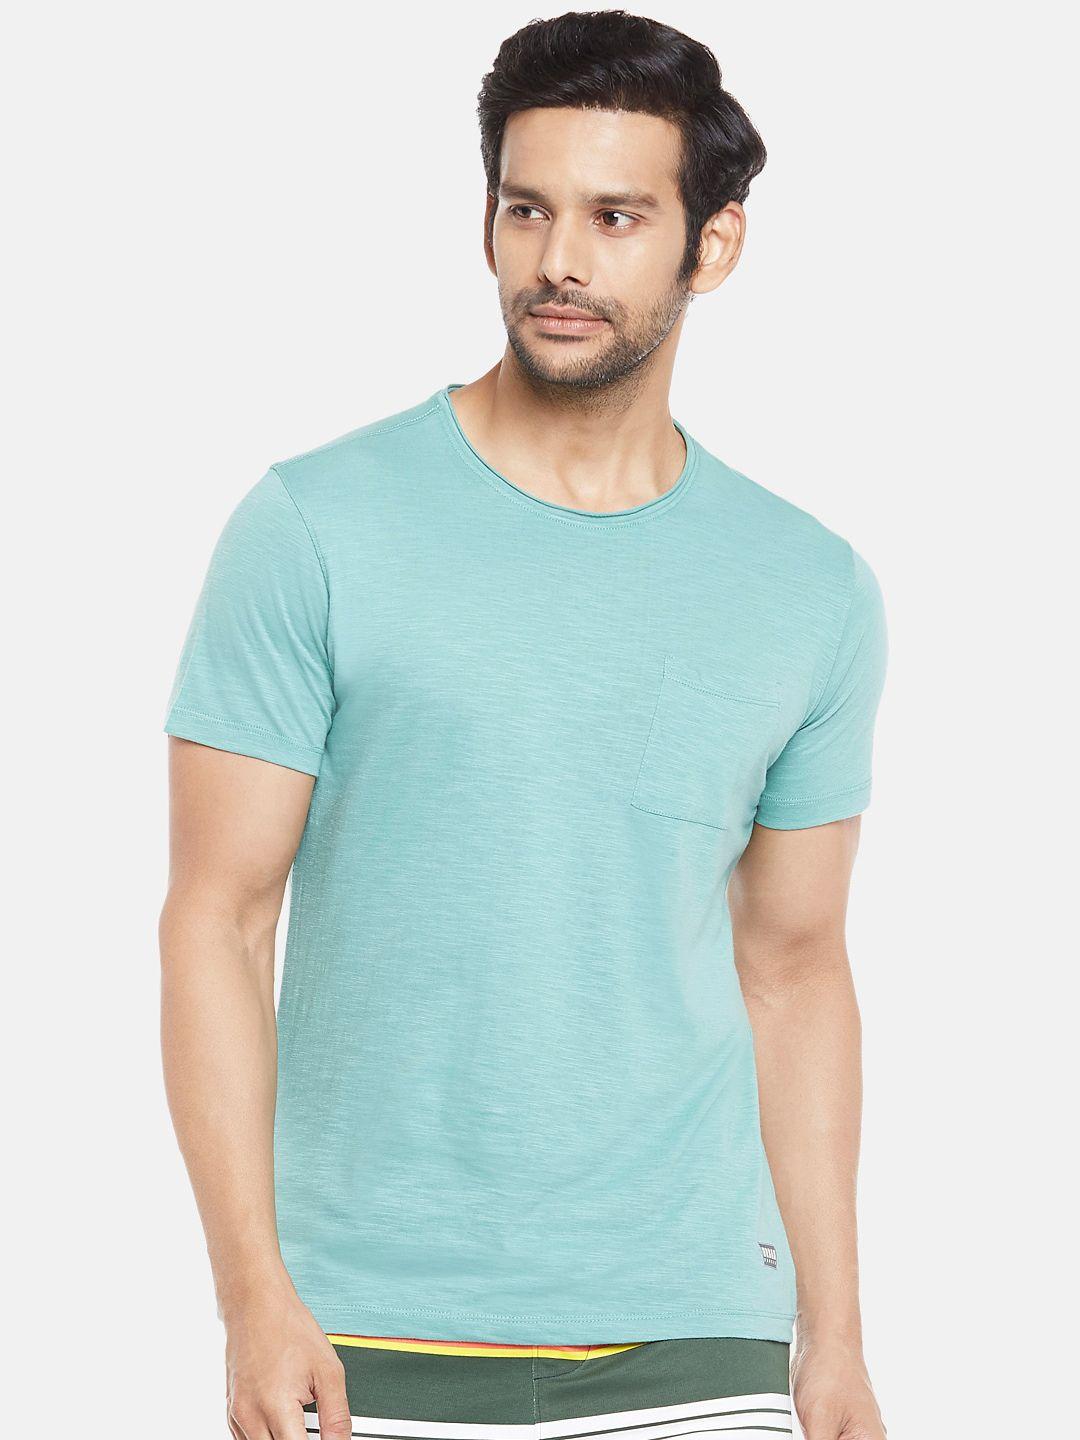 urban ranger by pantaloons men turquoise blue slim fit pure cotton t-shirt